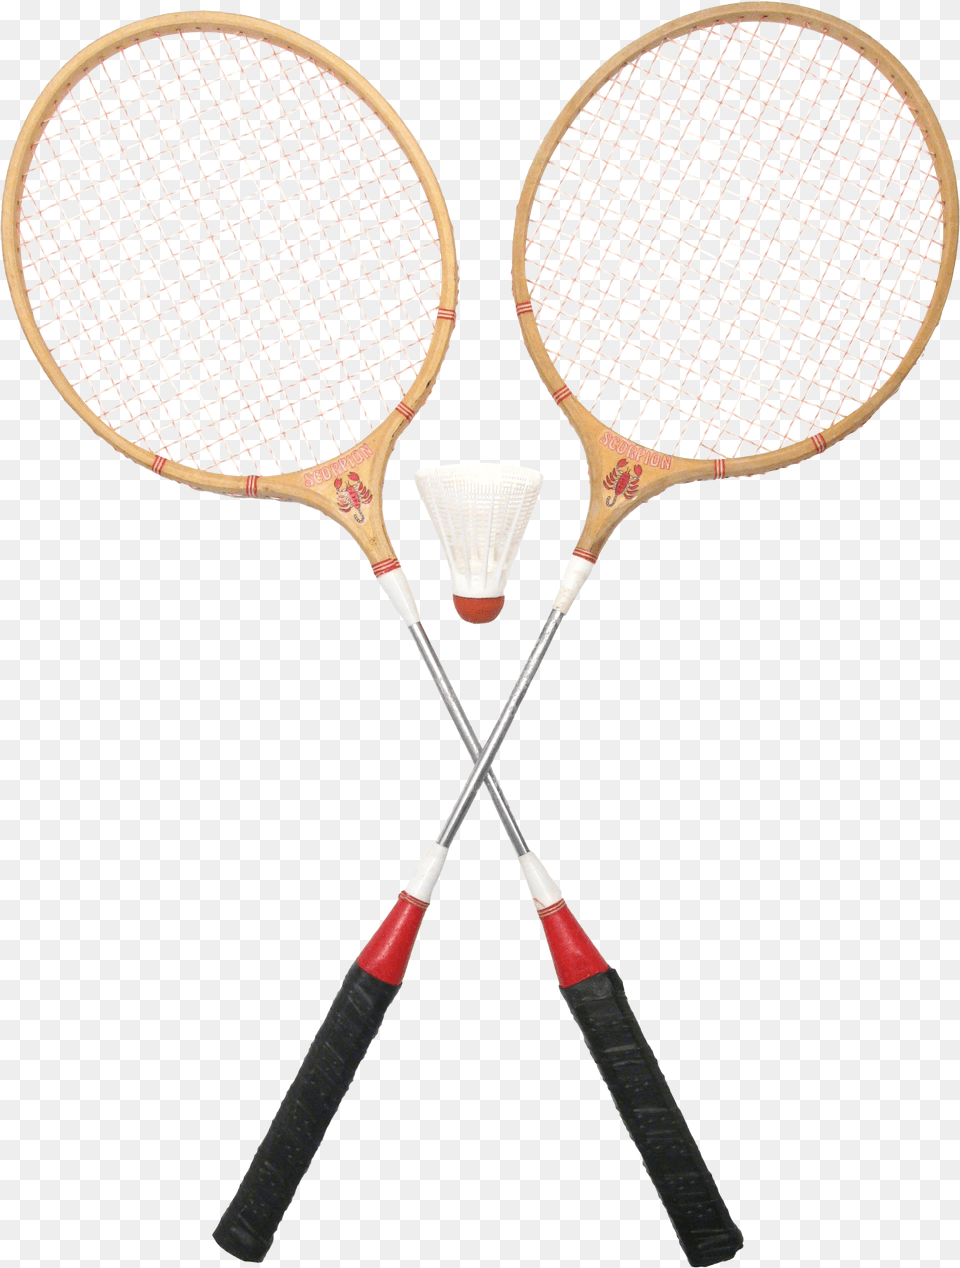 X 3102 1 Badminton Bat Logo, Racket, Sport, Tennis, Tennis Racket Png Image